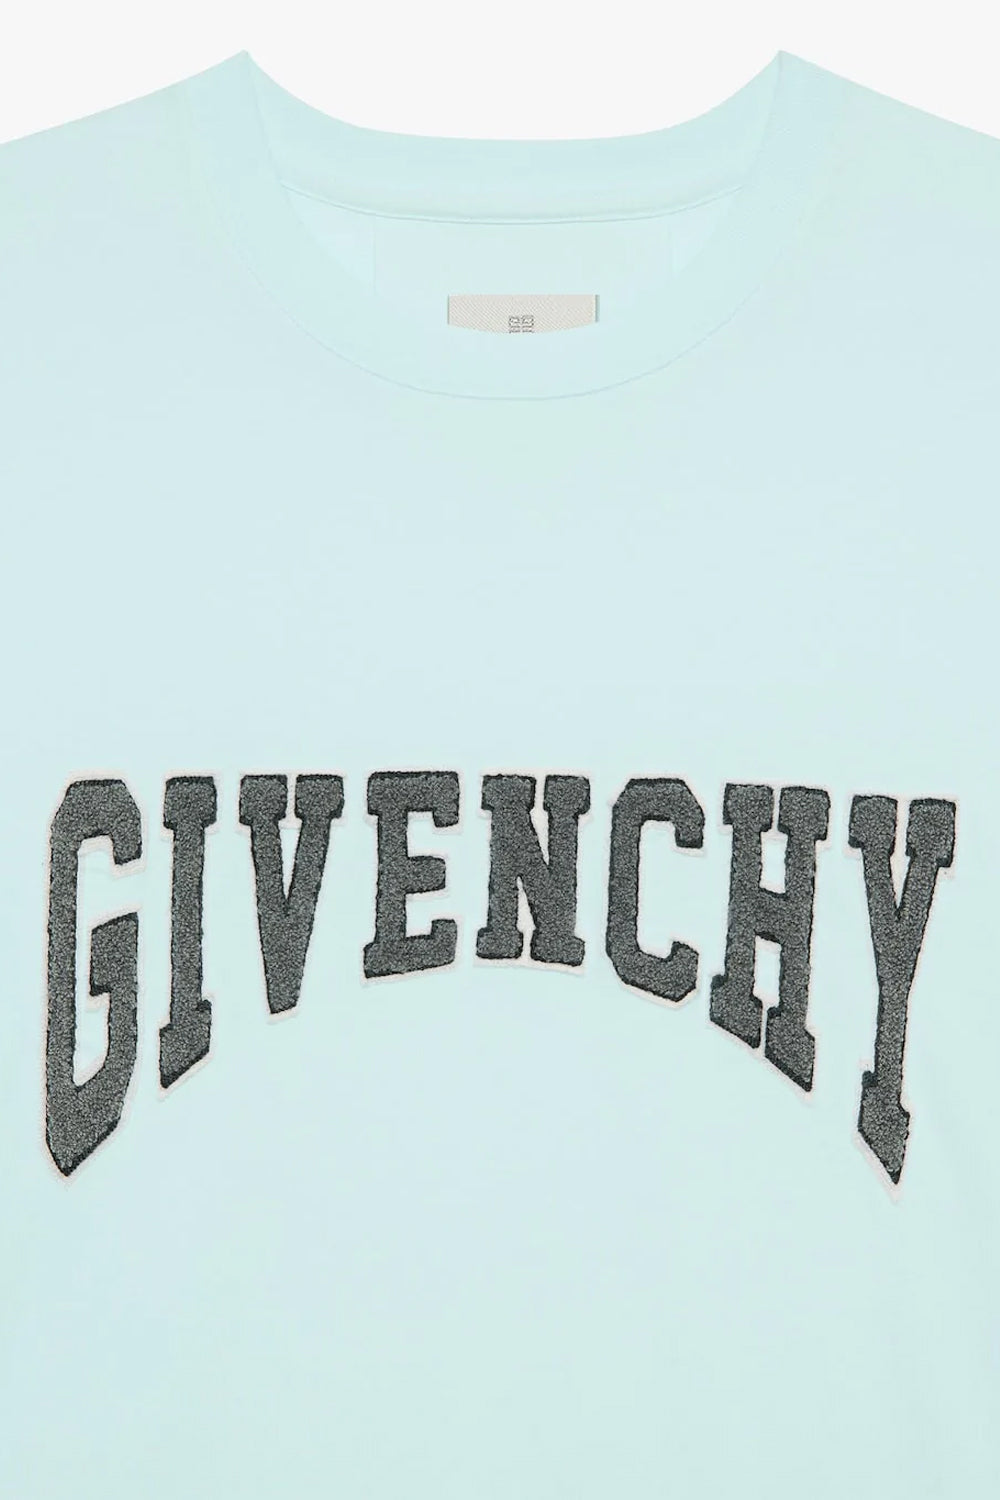 Givenchy Logo-Appliquéd Cotton-Jersey T-Shirt